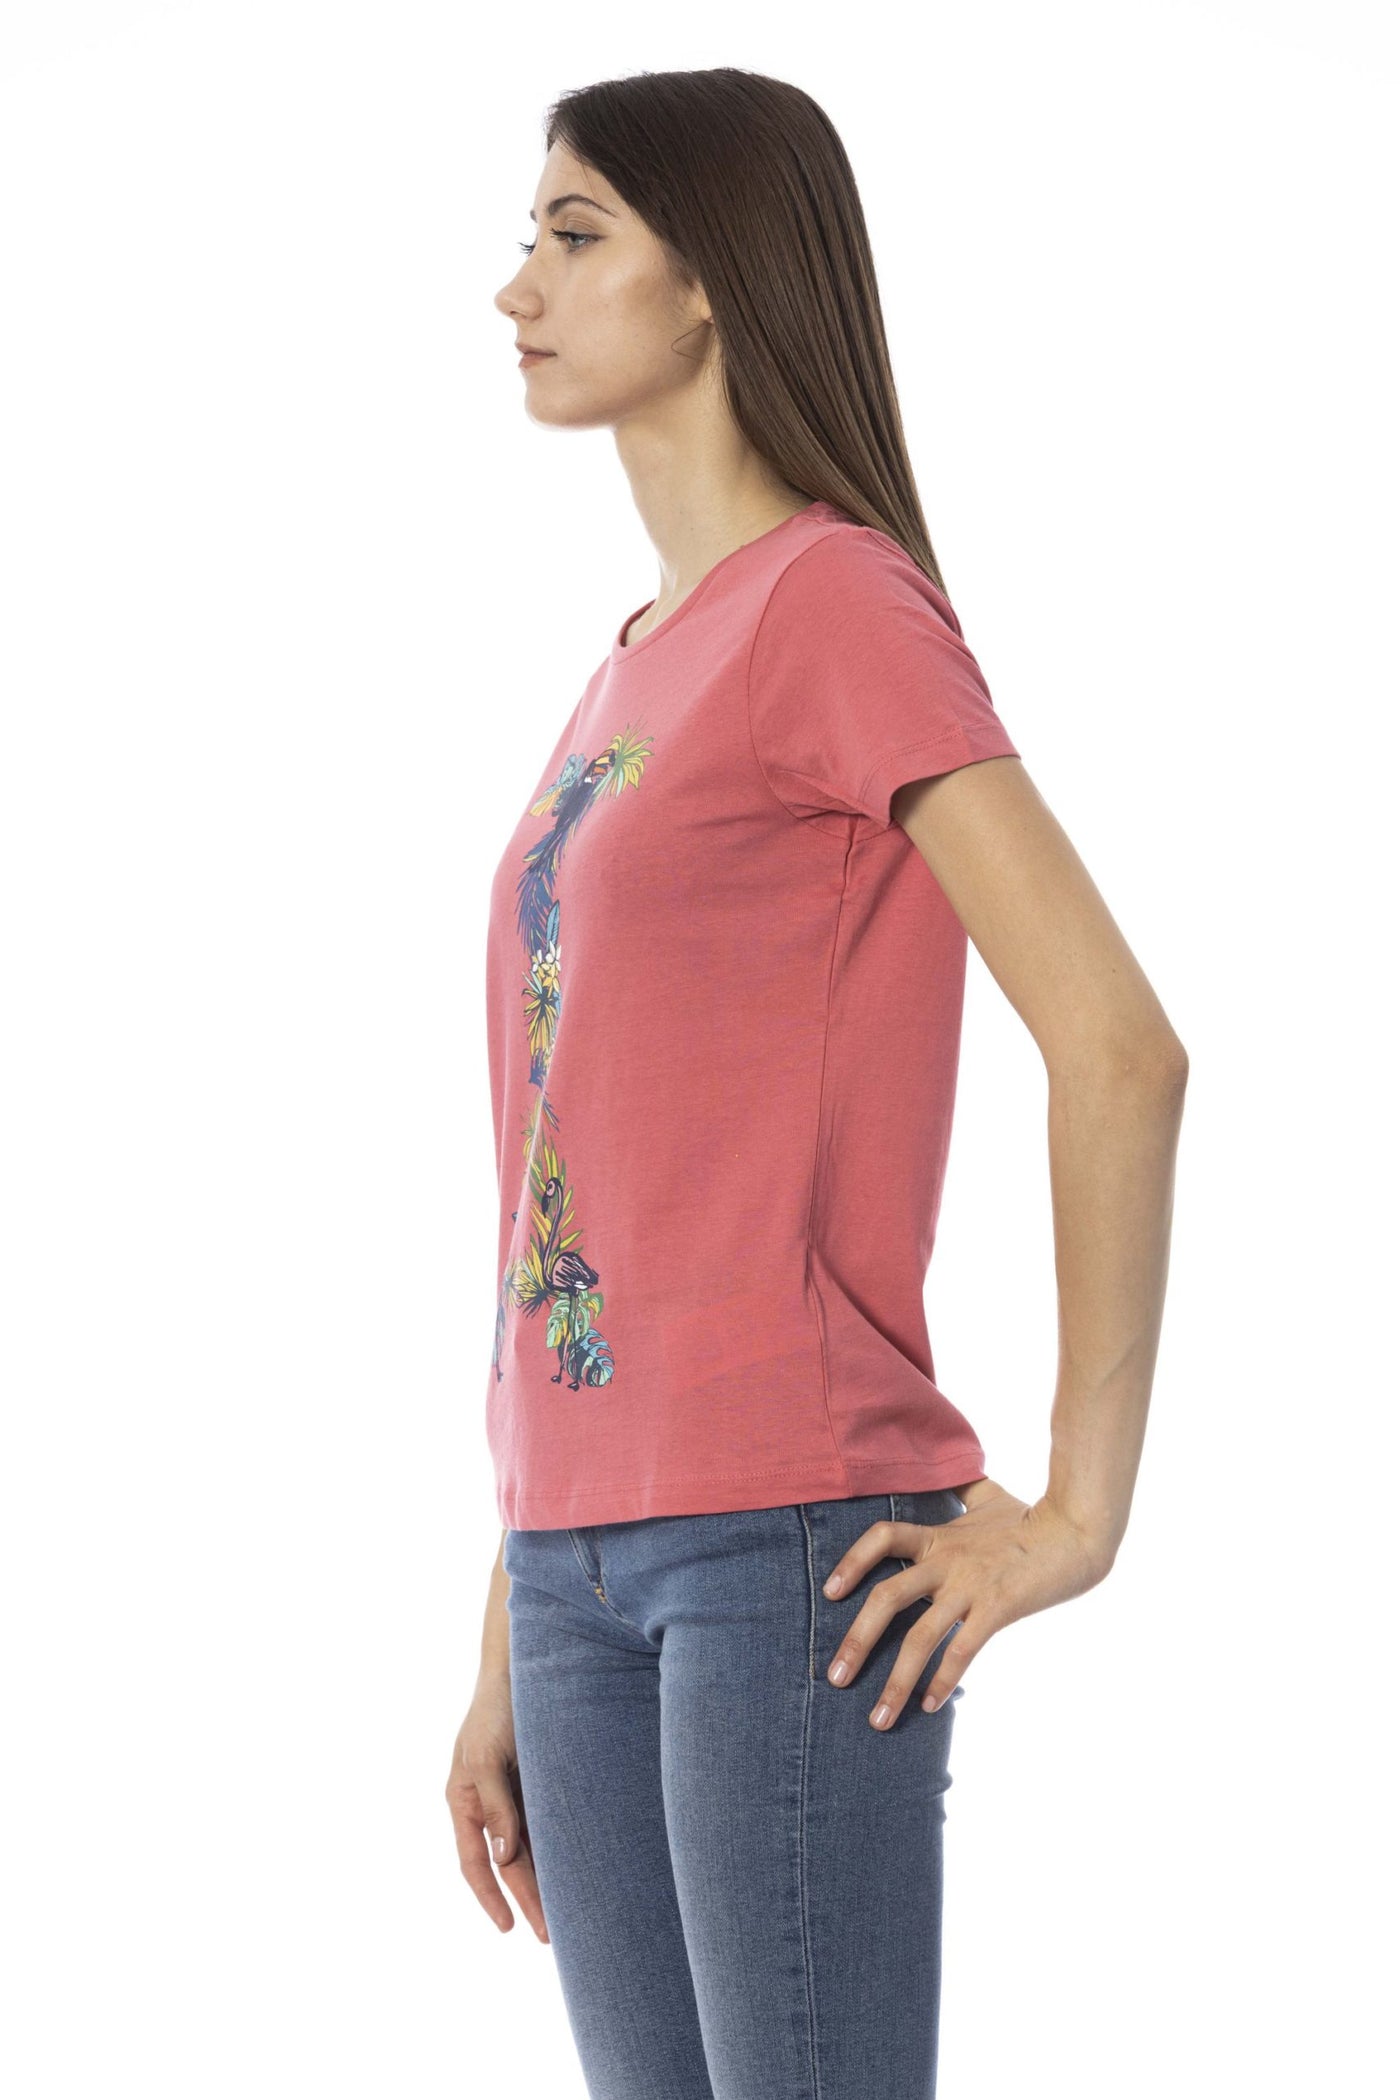 Trussardi Action Fuchsia Cotton Tops & T-Shirt